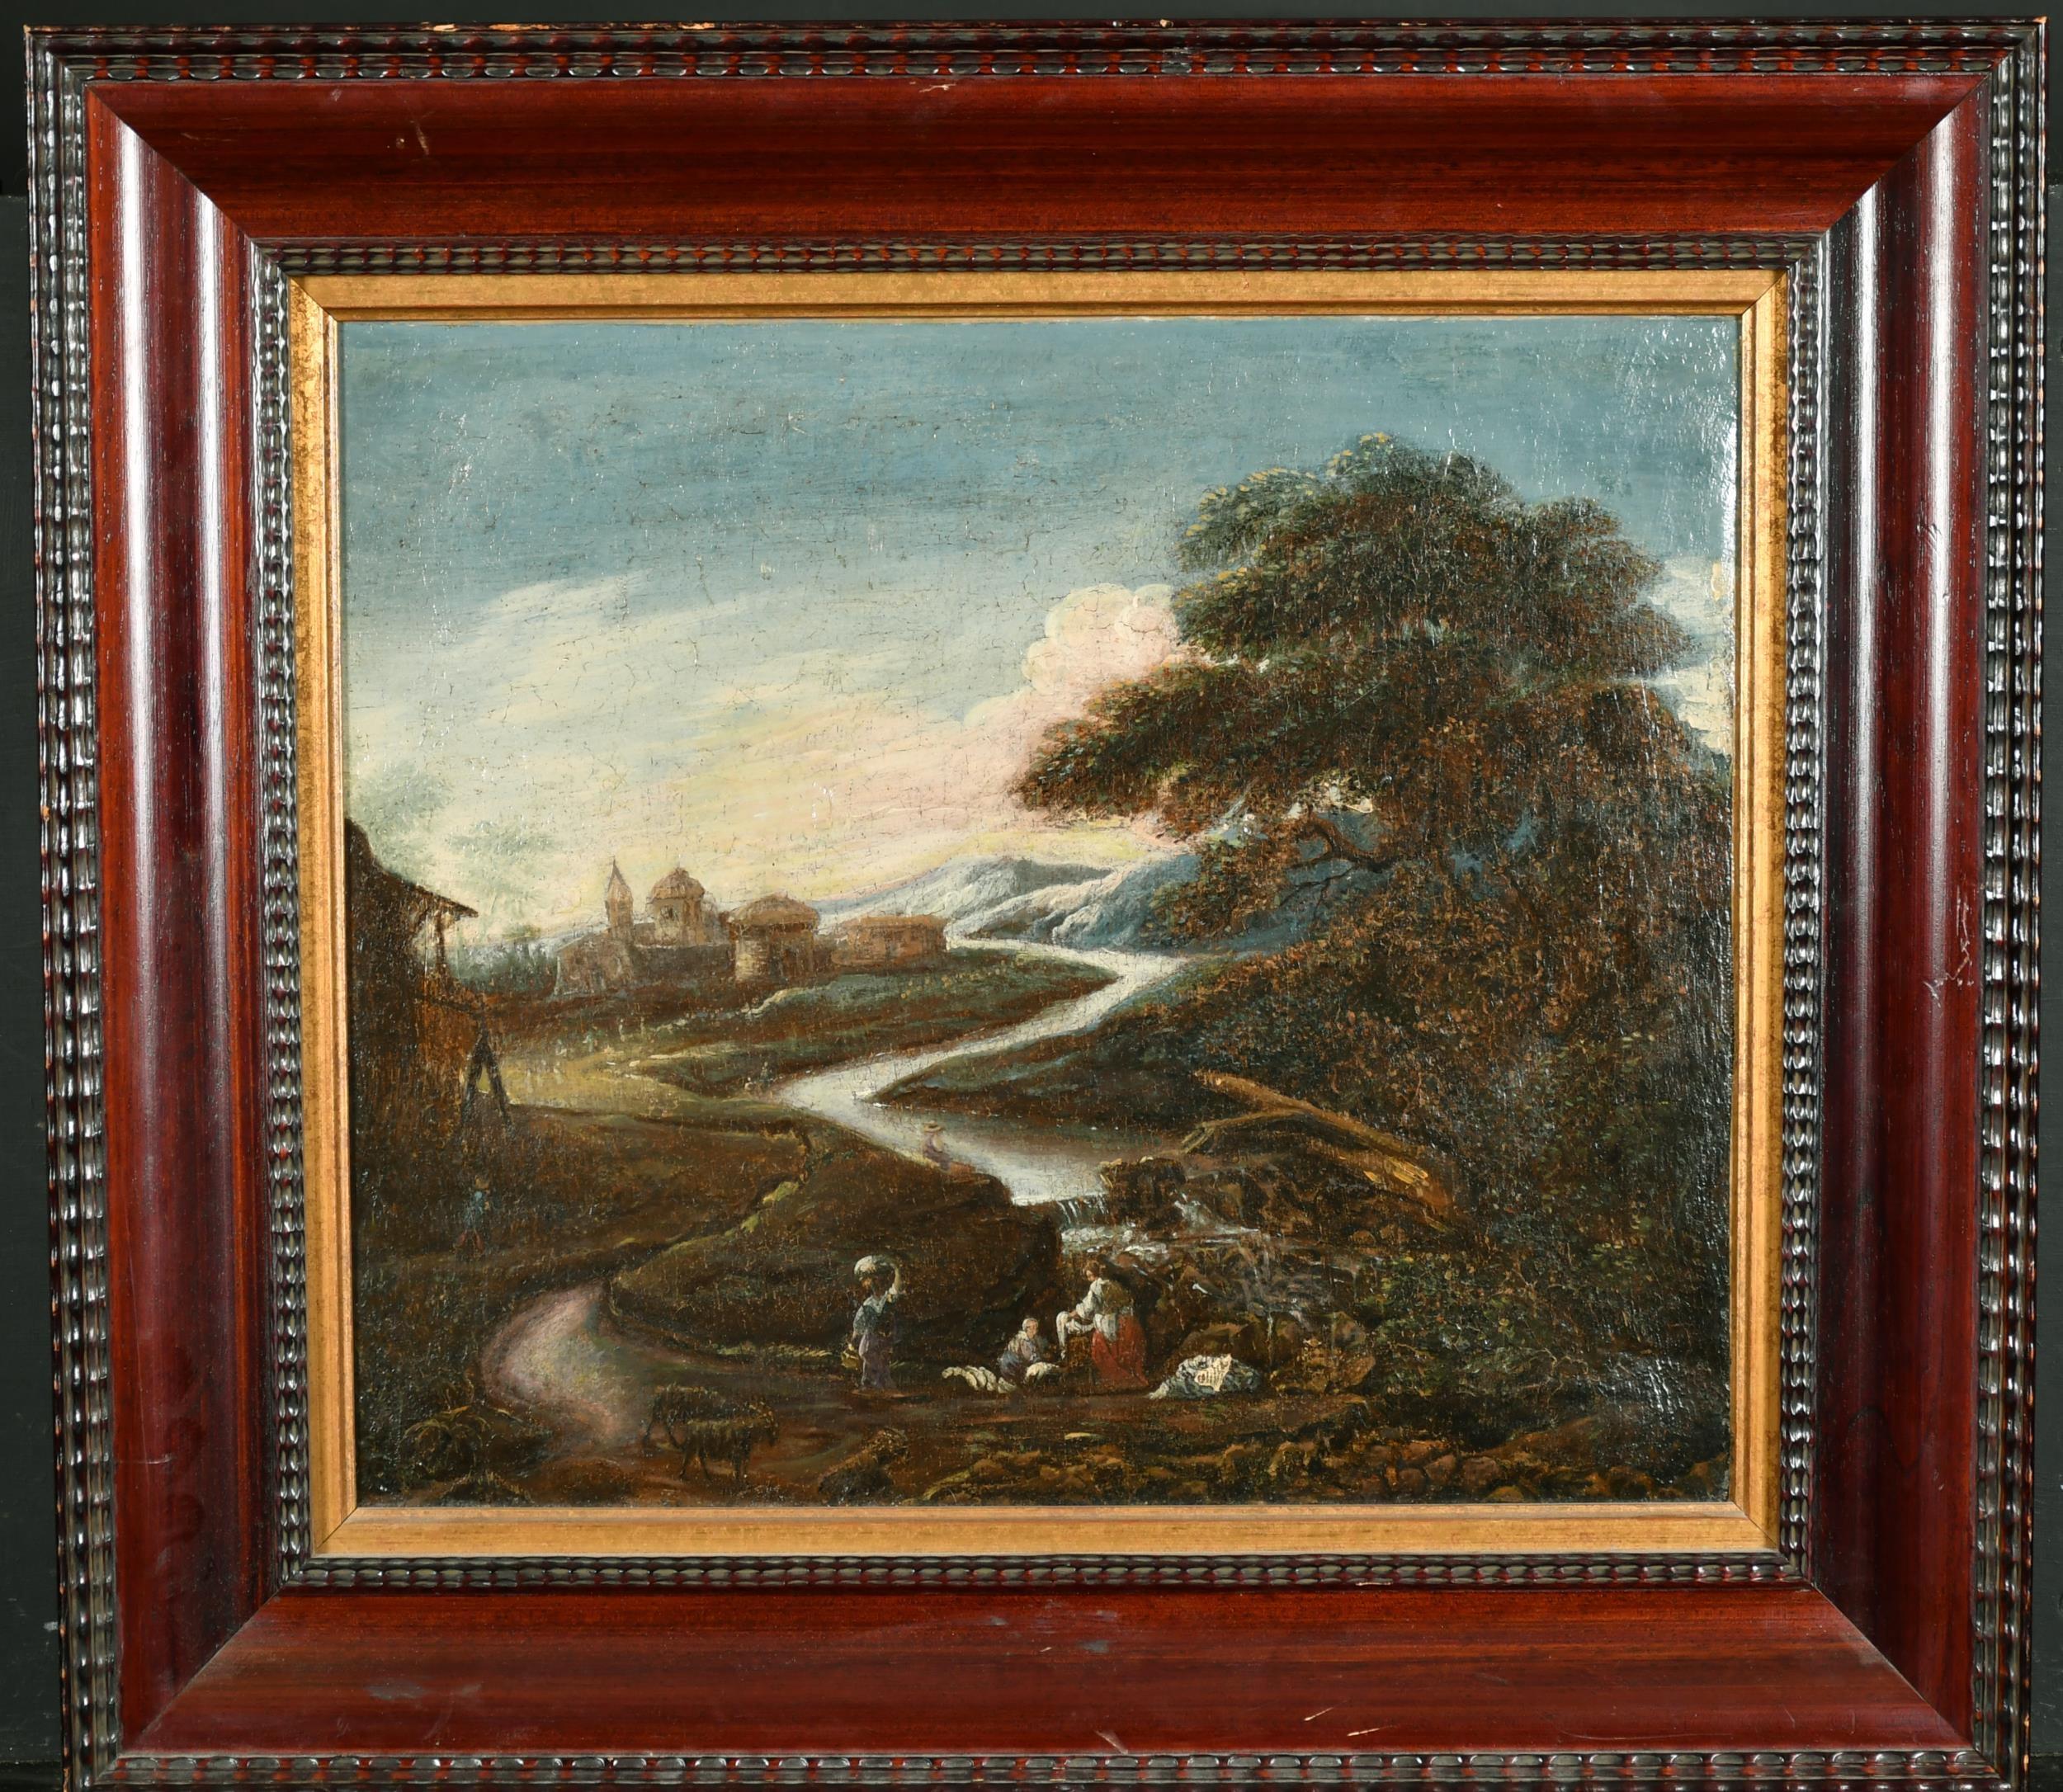 17th century landscape